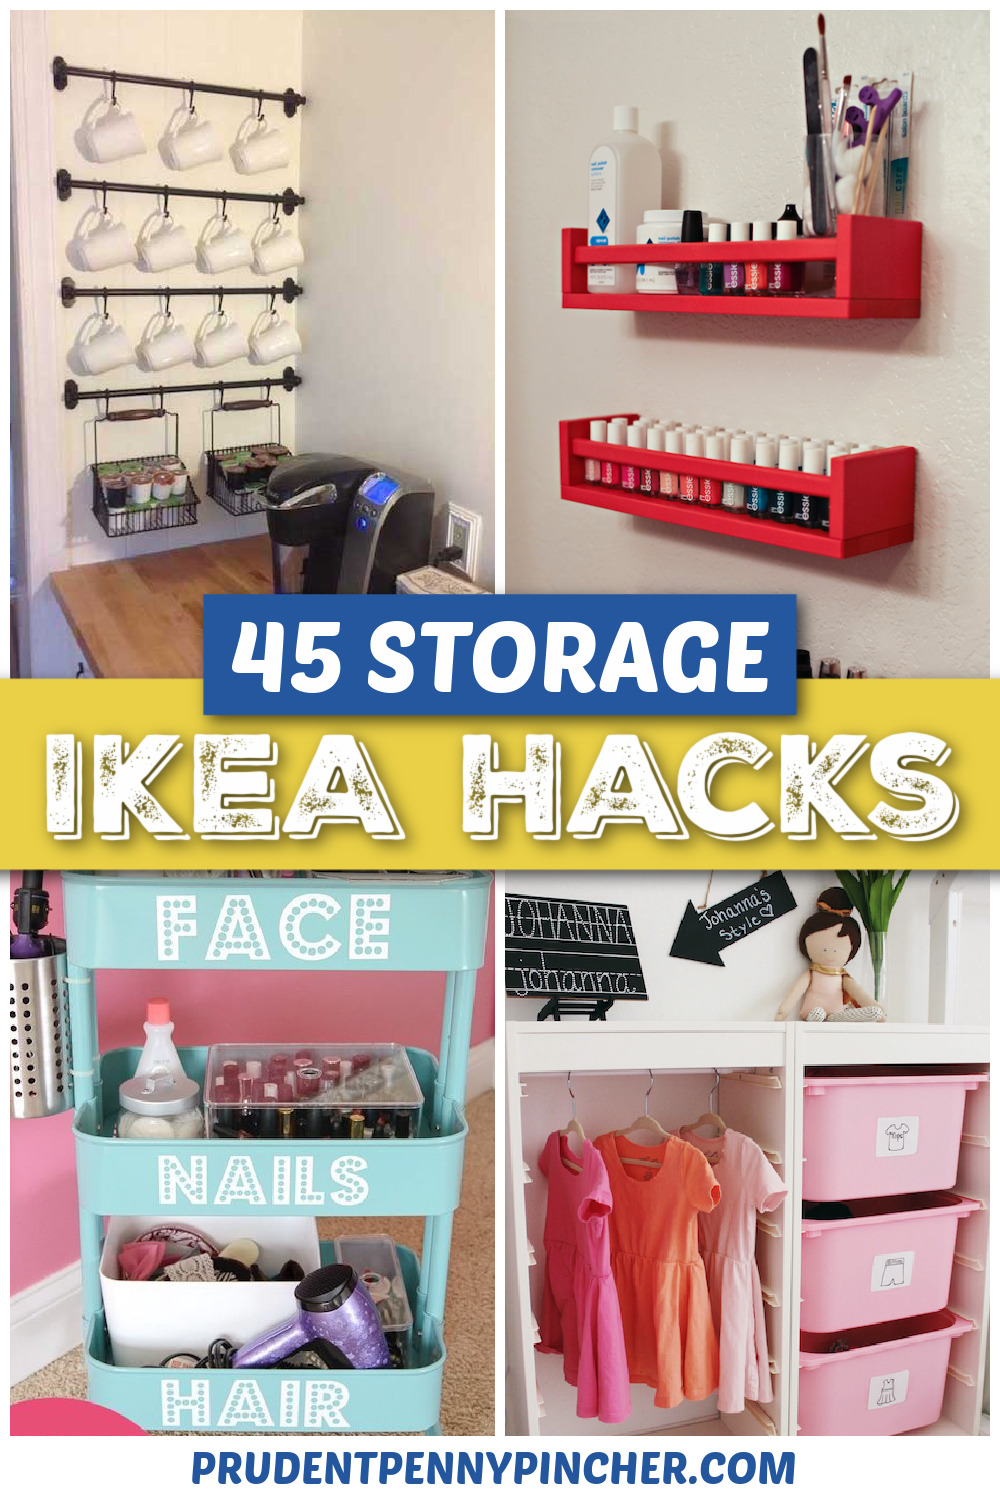 Storage & organization - IKEA